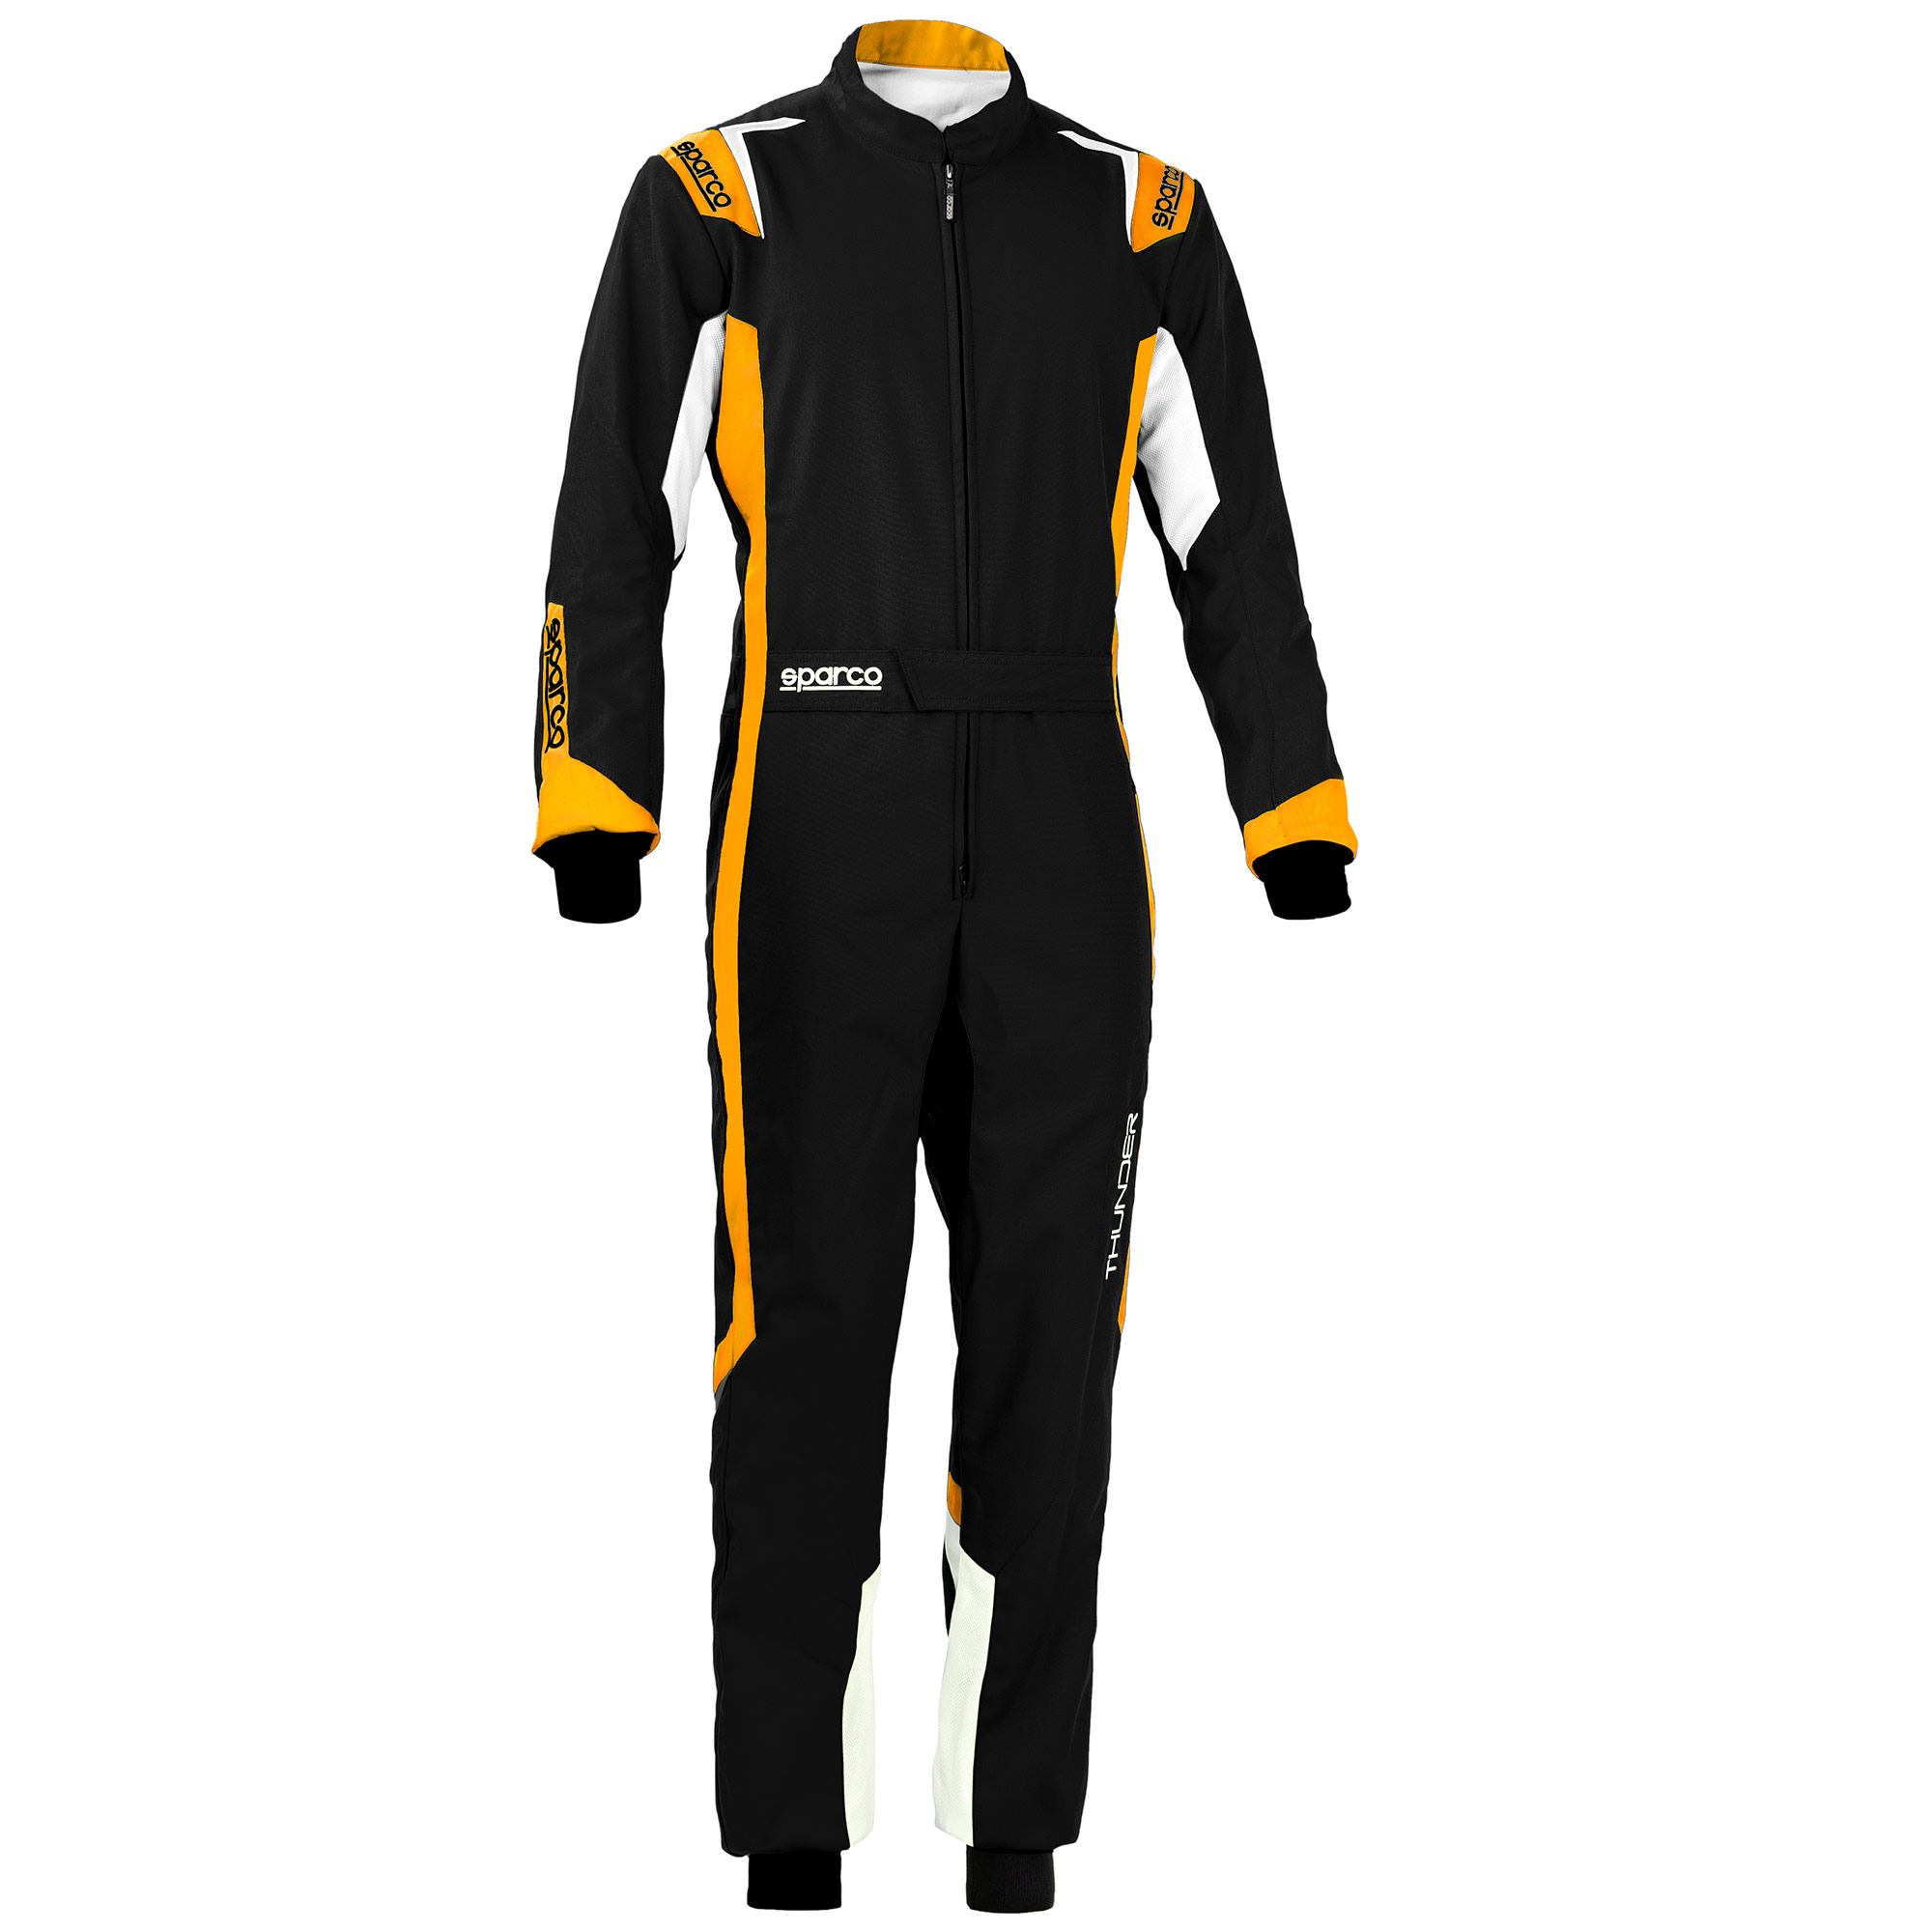 New Go Kart Racing Suit/Karting Suit Level 2 CIK/FIA Approved 